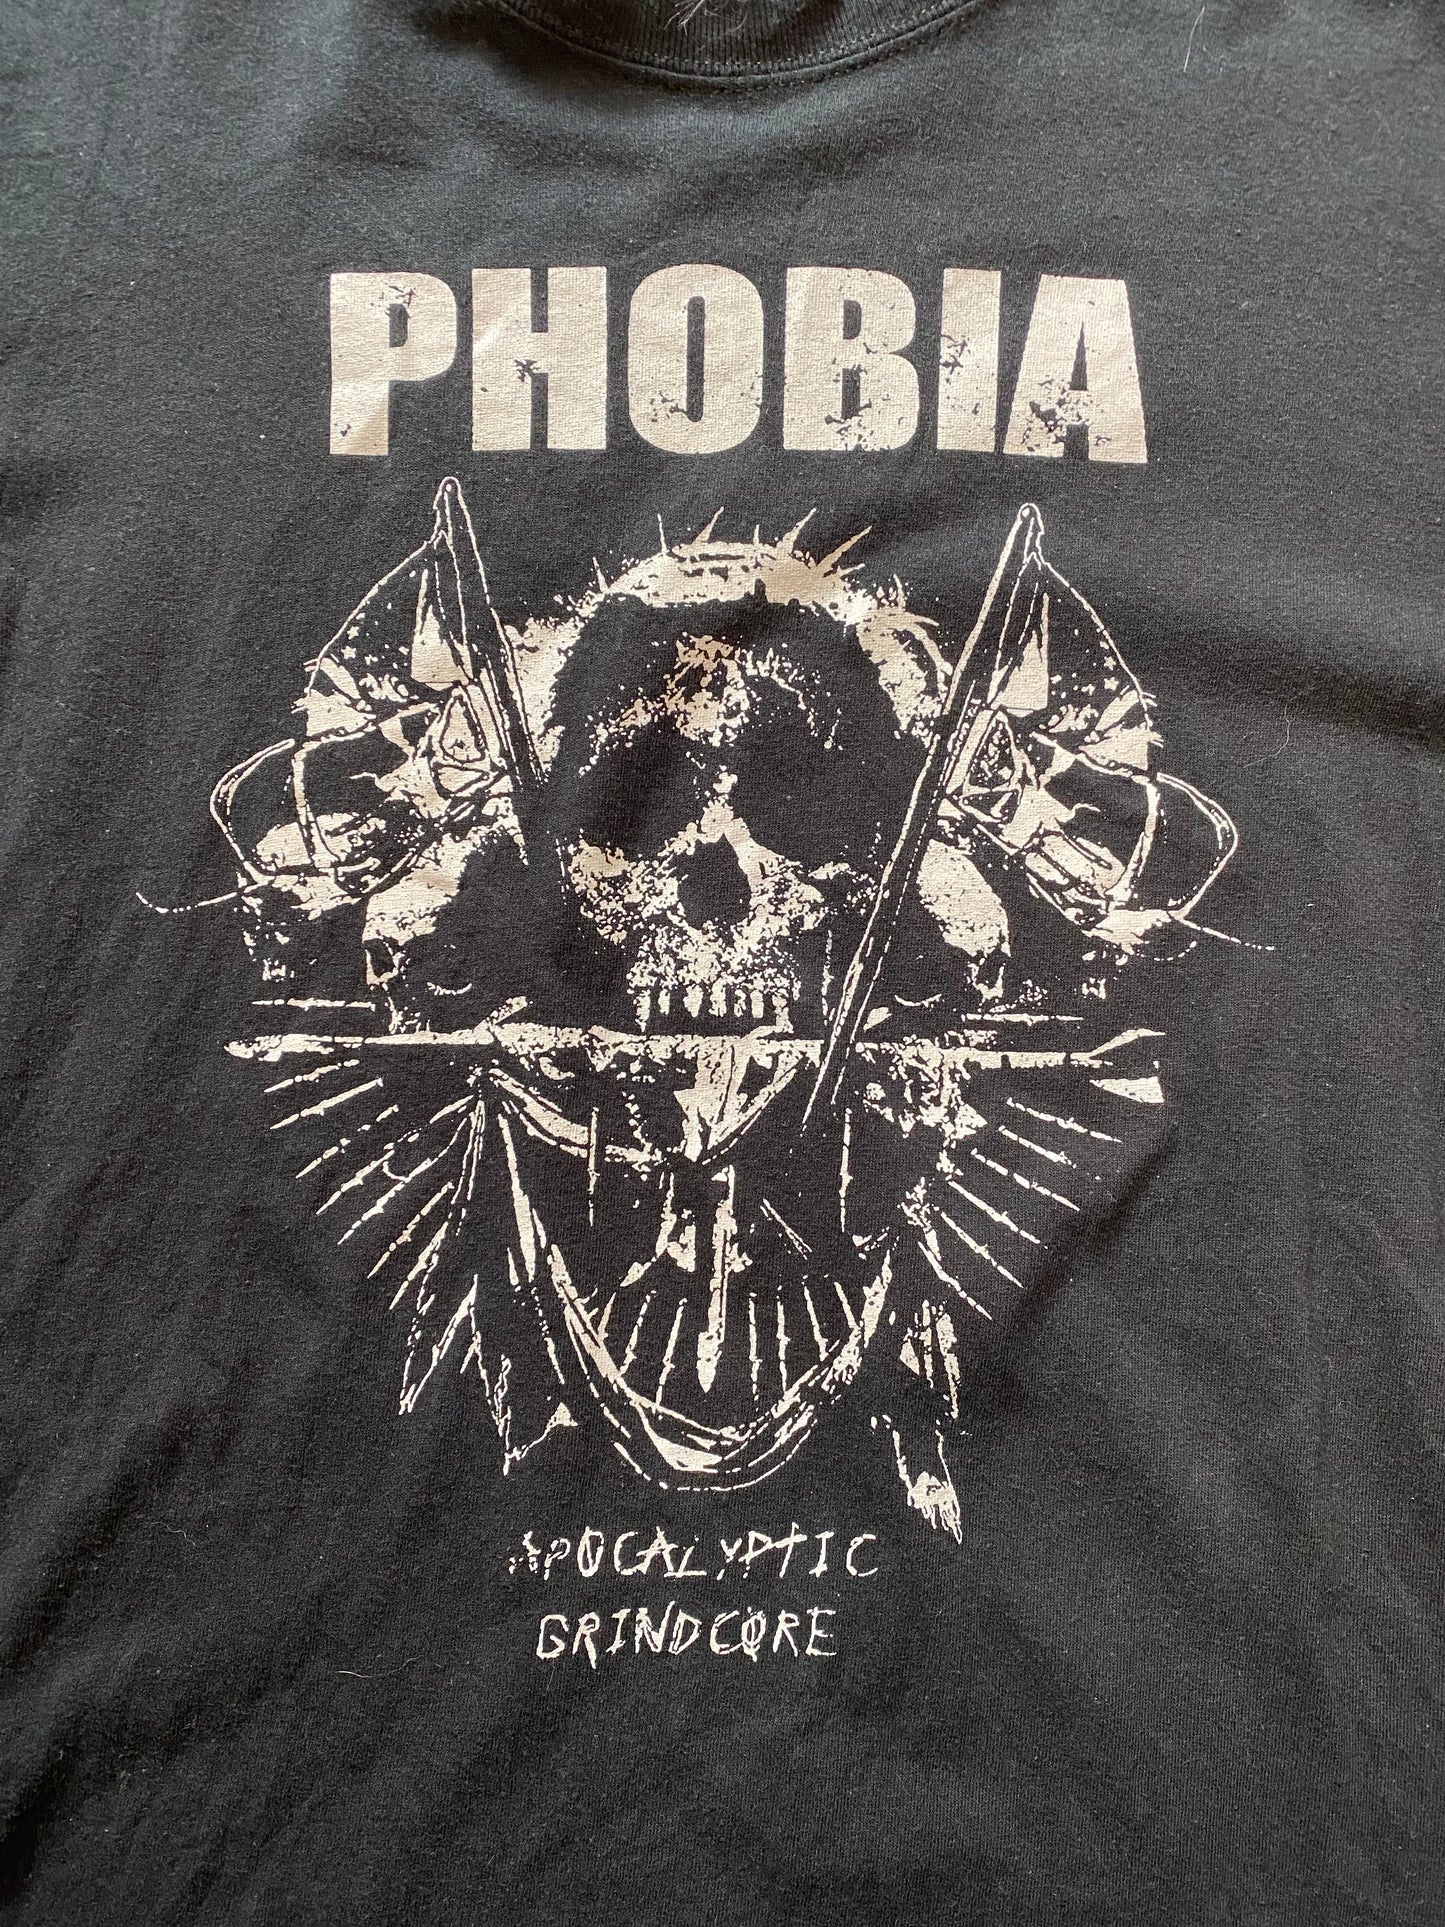 Phobia “Apocalyptic Grindcore” T-Shirt